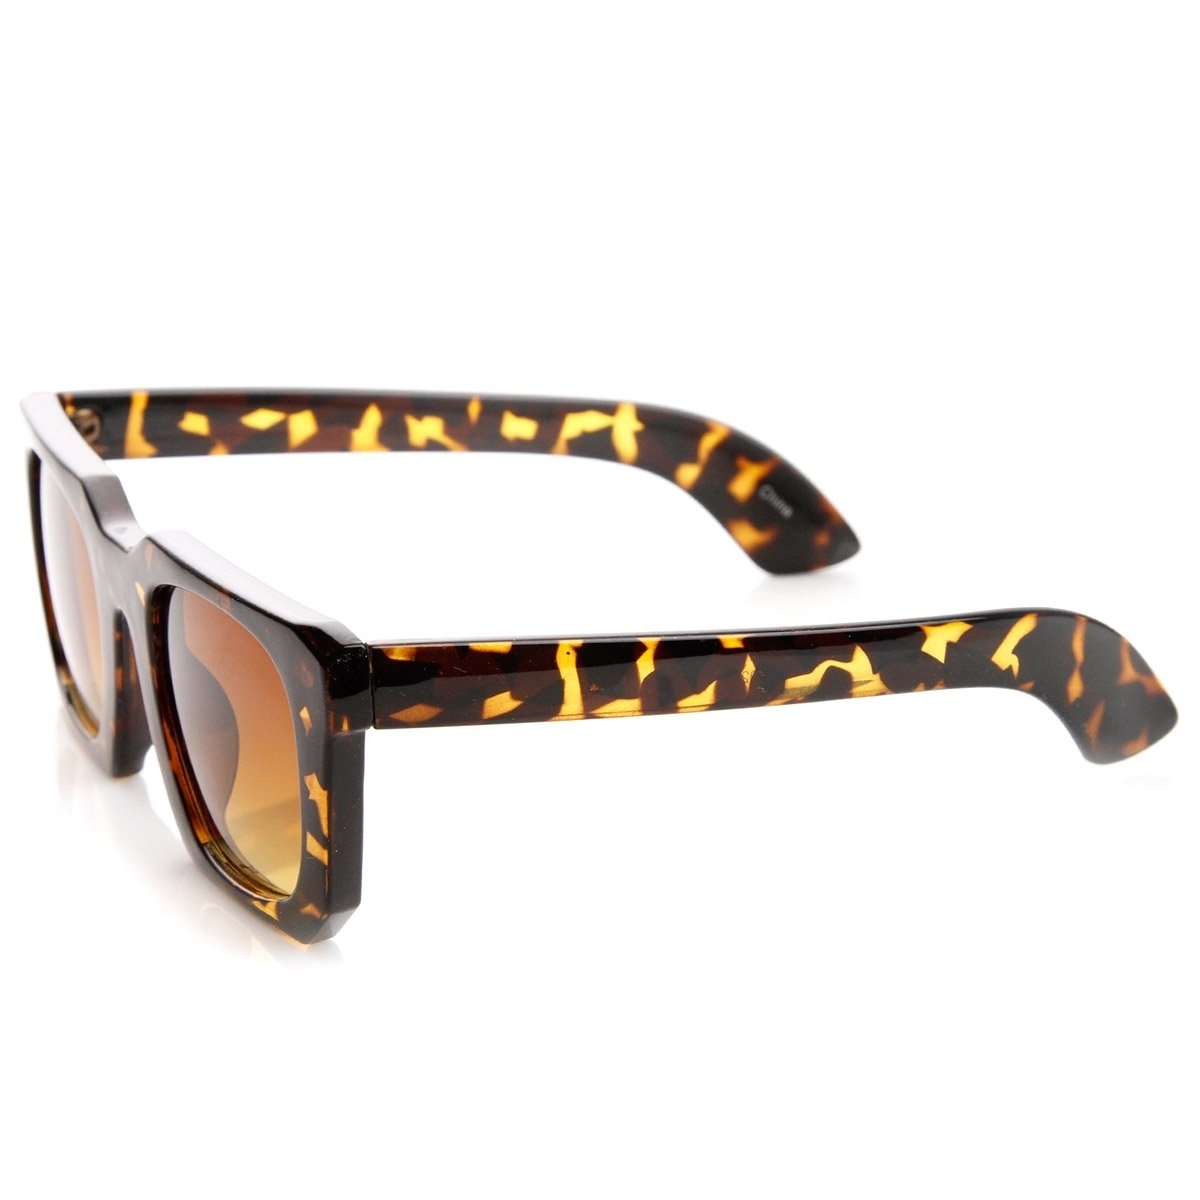 Bold Square Angled Frame Mod Horn Rimmed Sunglasses - Tortoise Brown